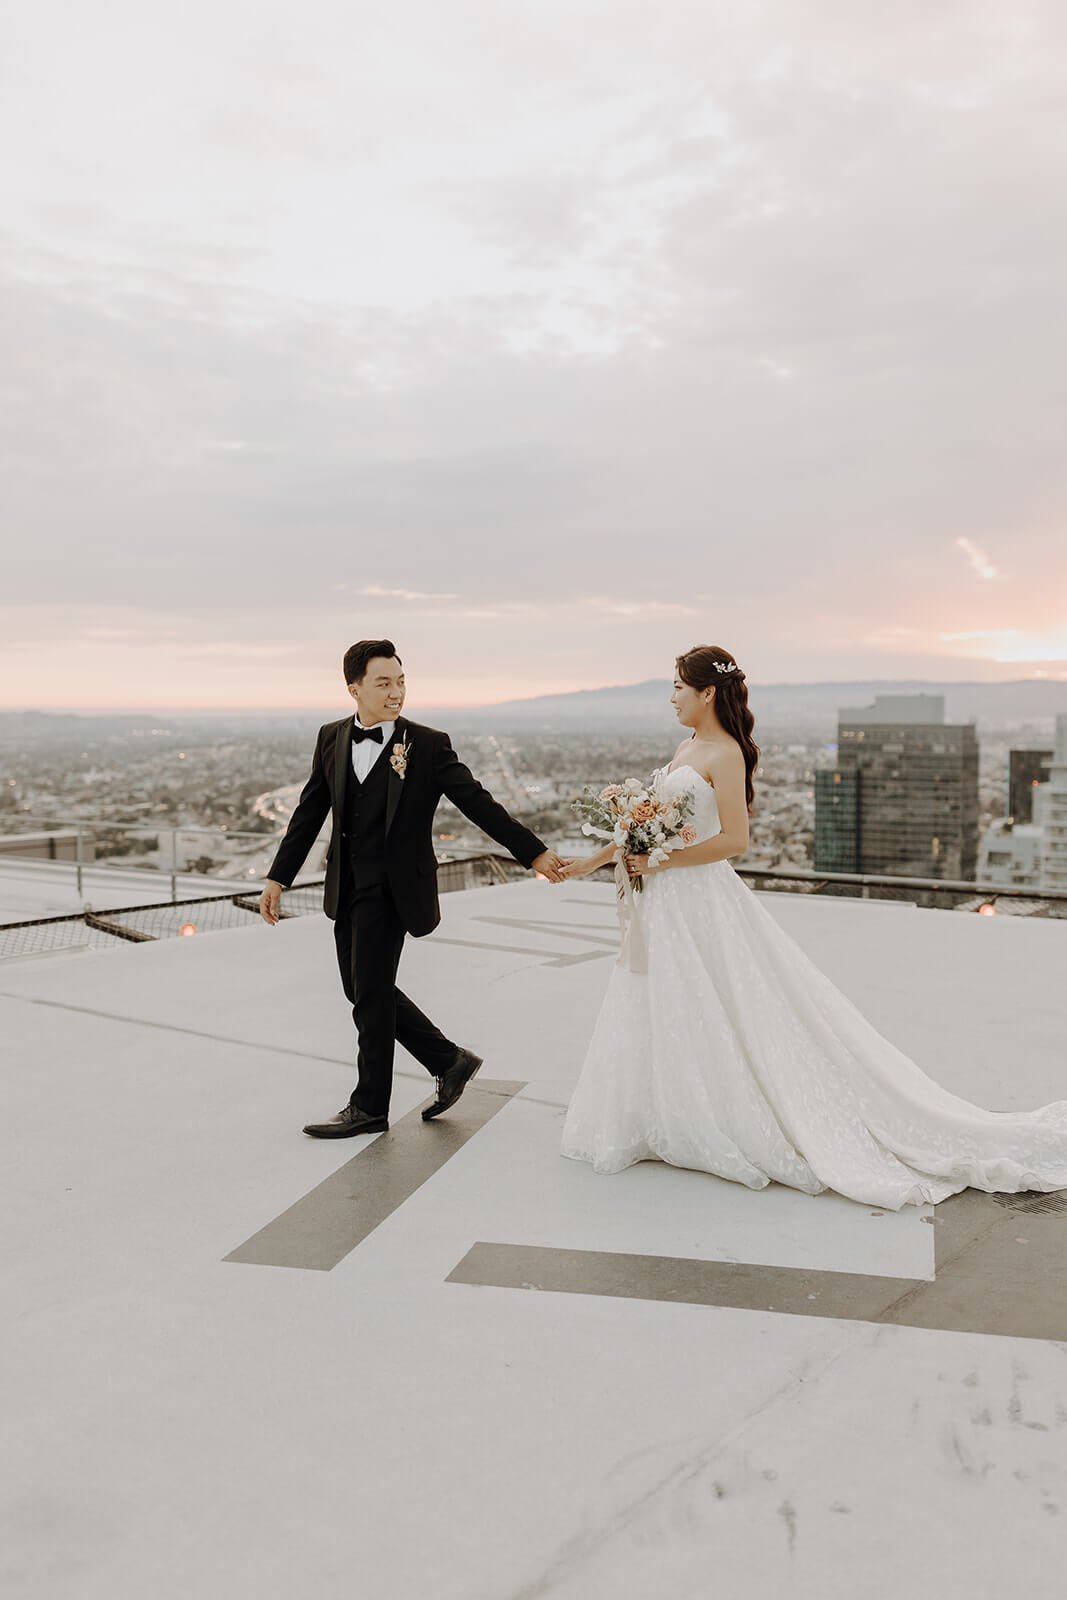 Sunset couple portraits at Los Angeles wedding